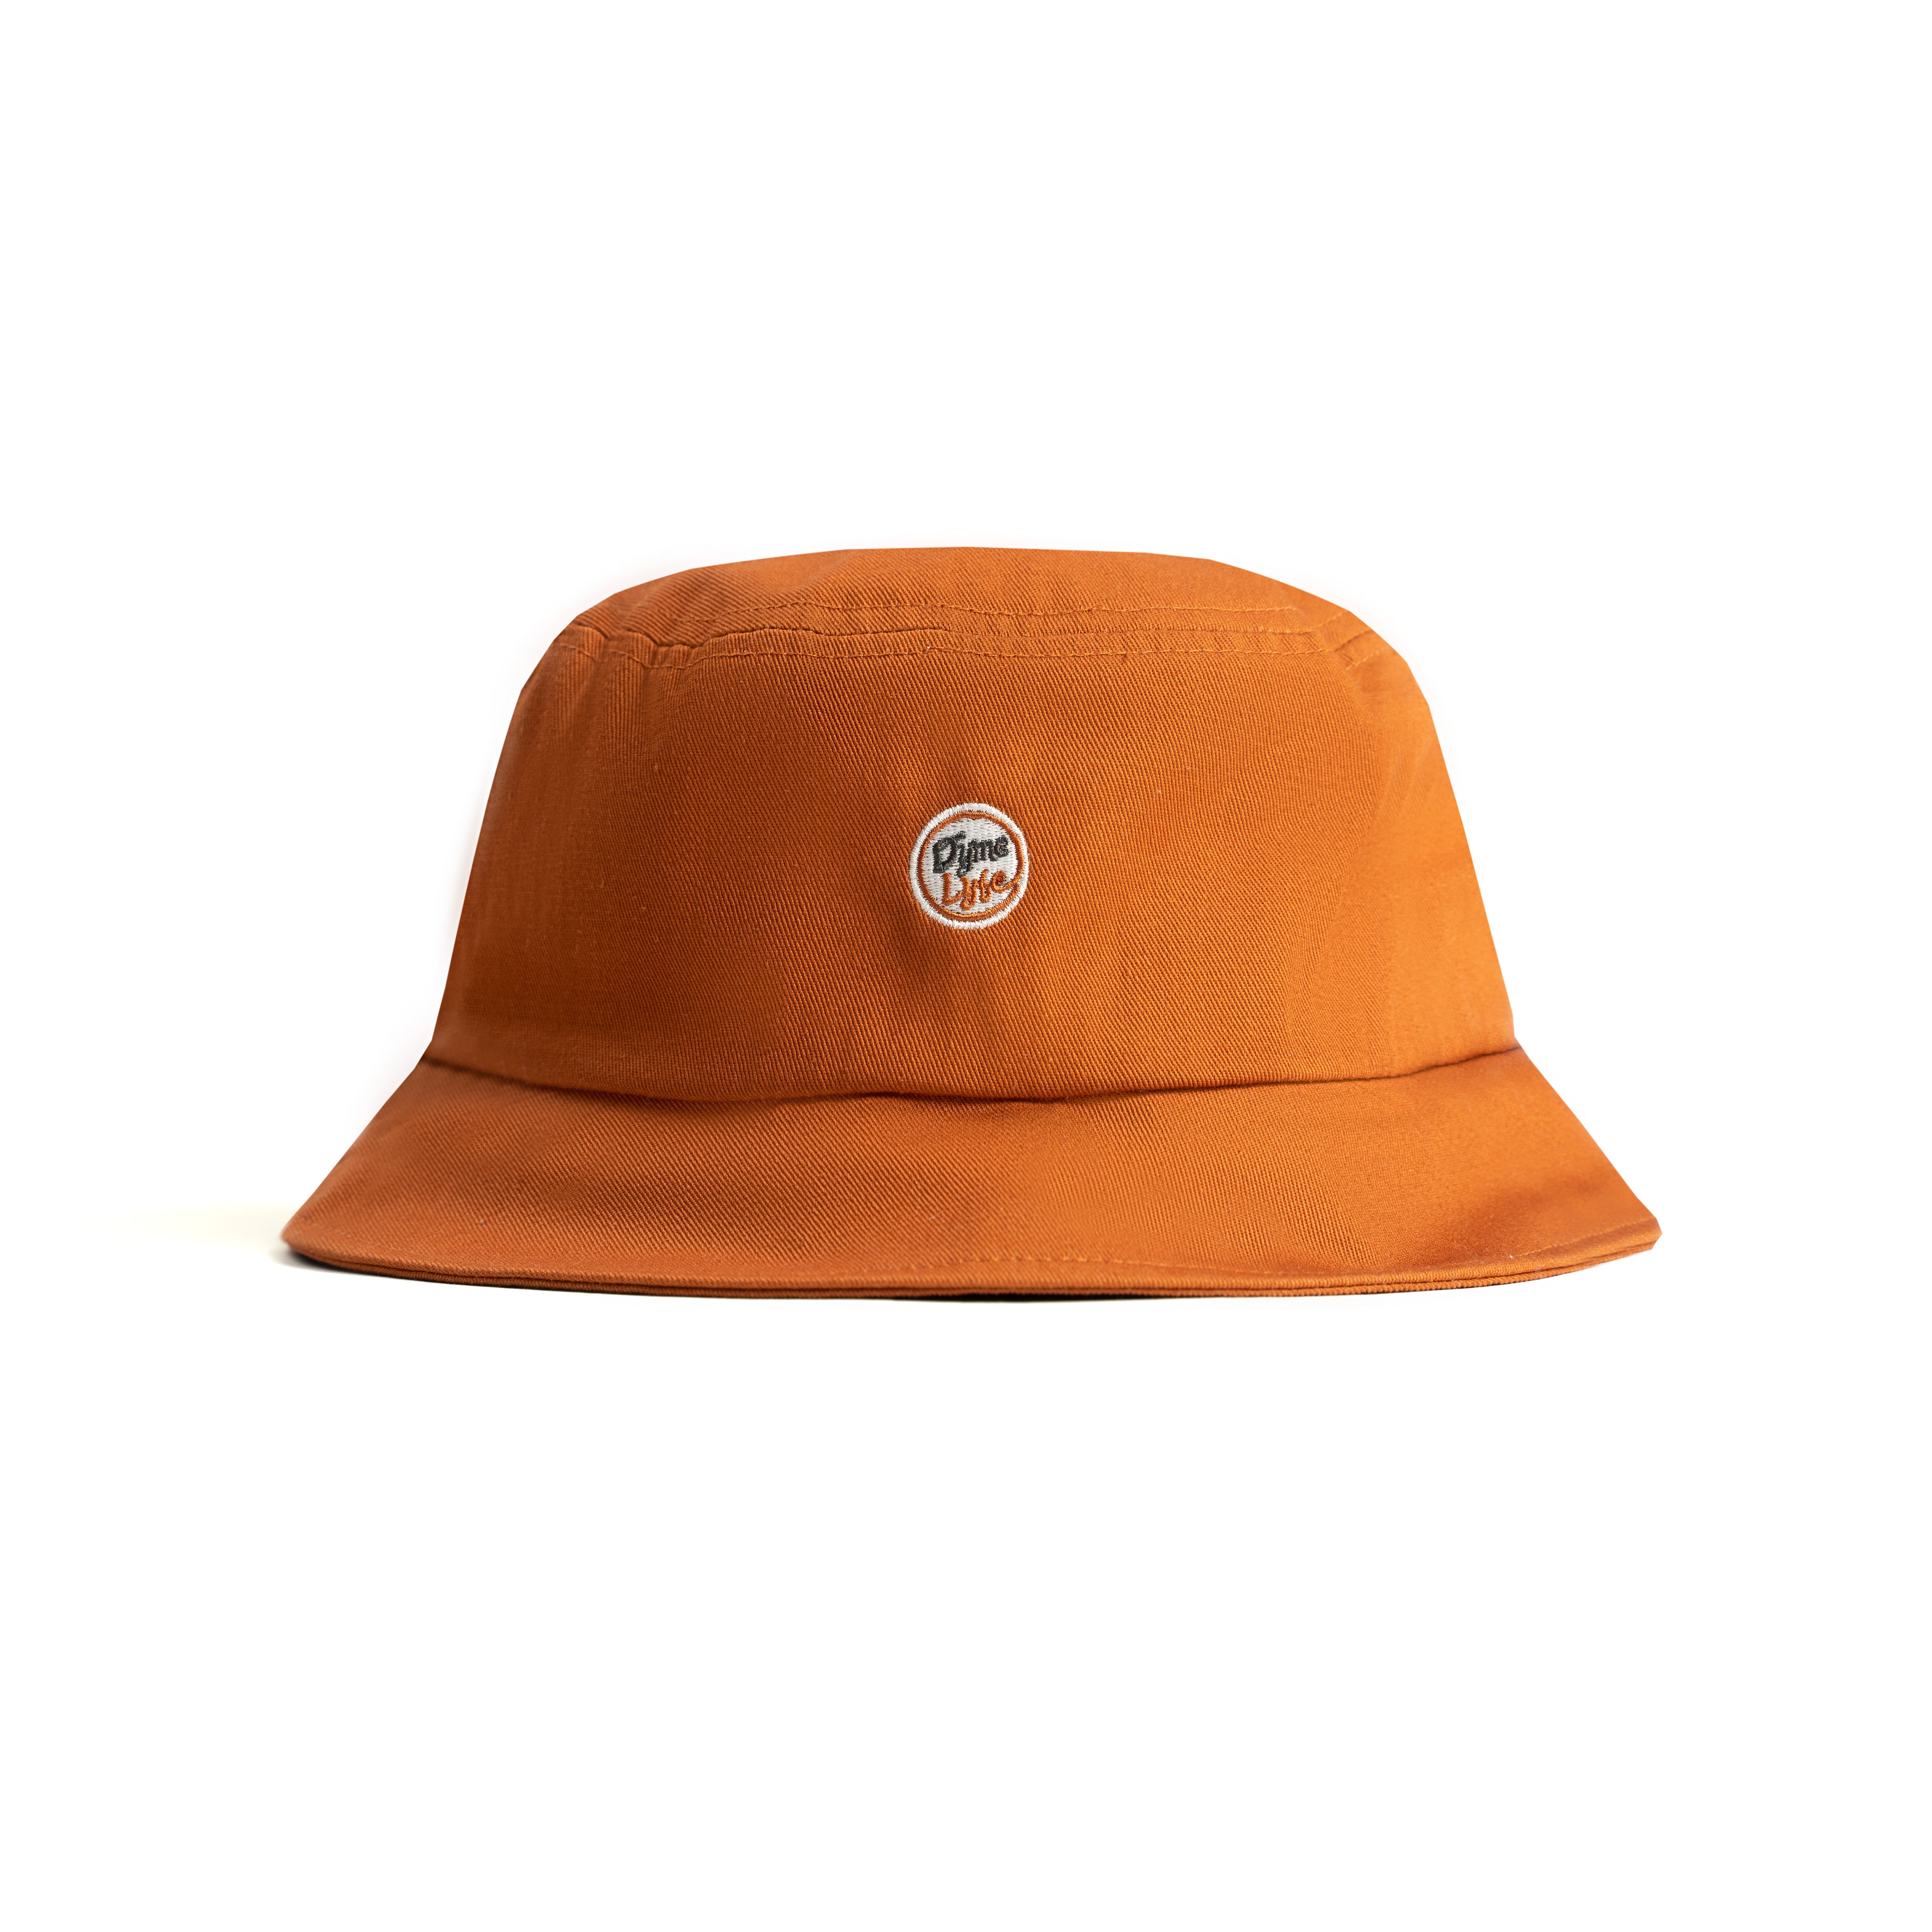 Texas Longhorns Bucket Hat